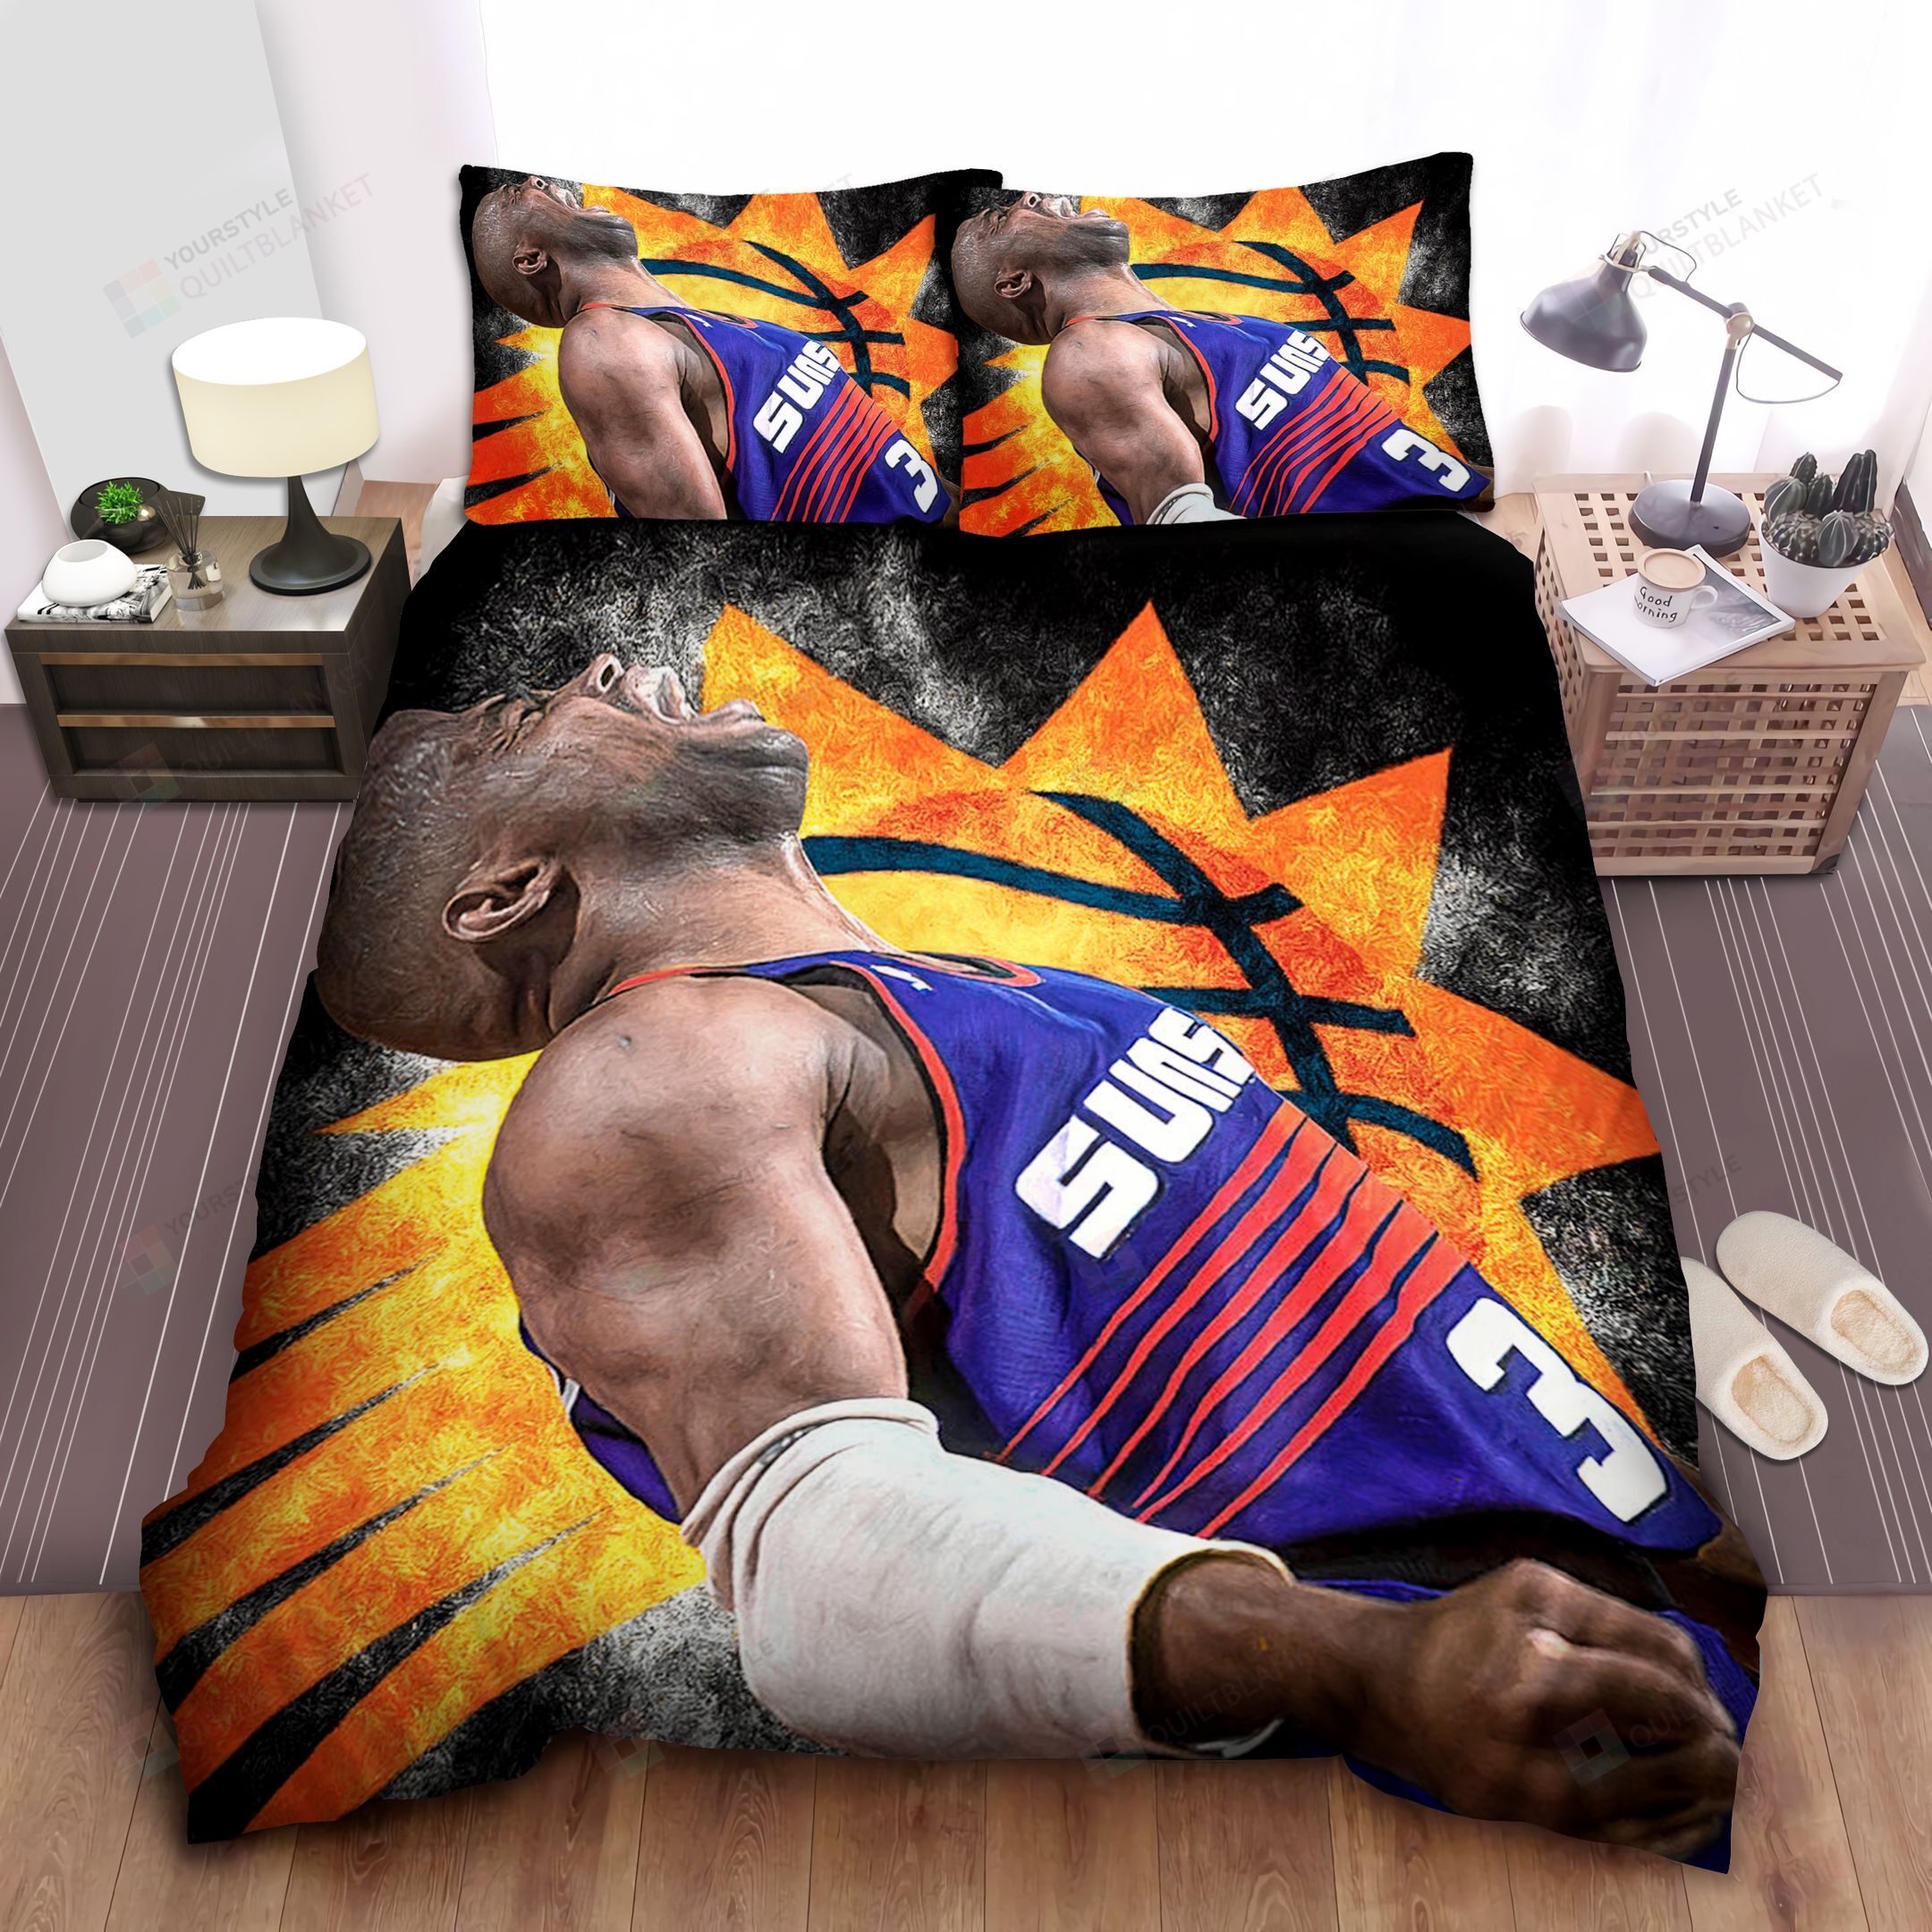 Nba Legend Charles Barkley Celebrating In Basketball Theme Bed Sheet Spread Comforter Duvet Cover Bedding Sets